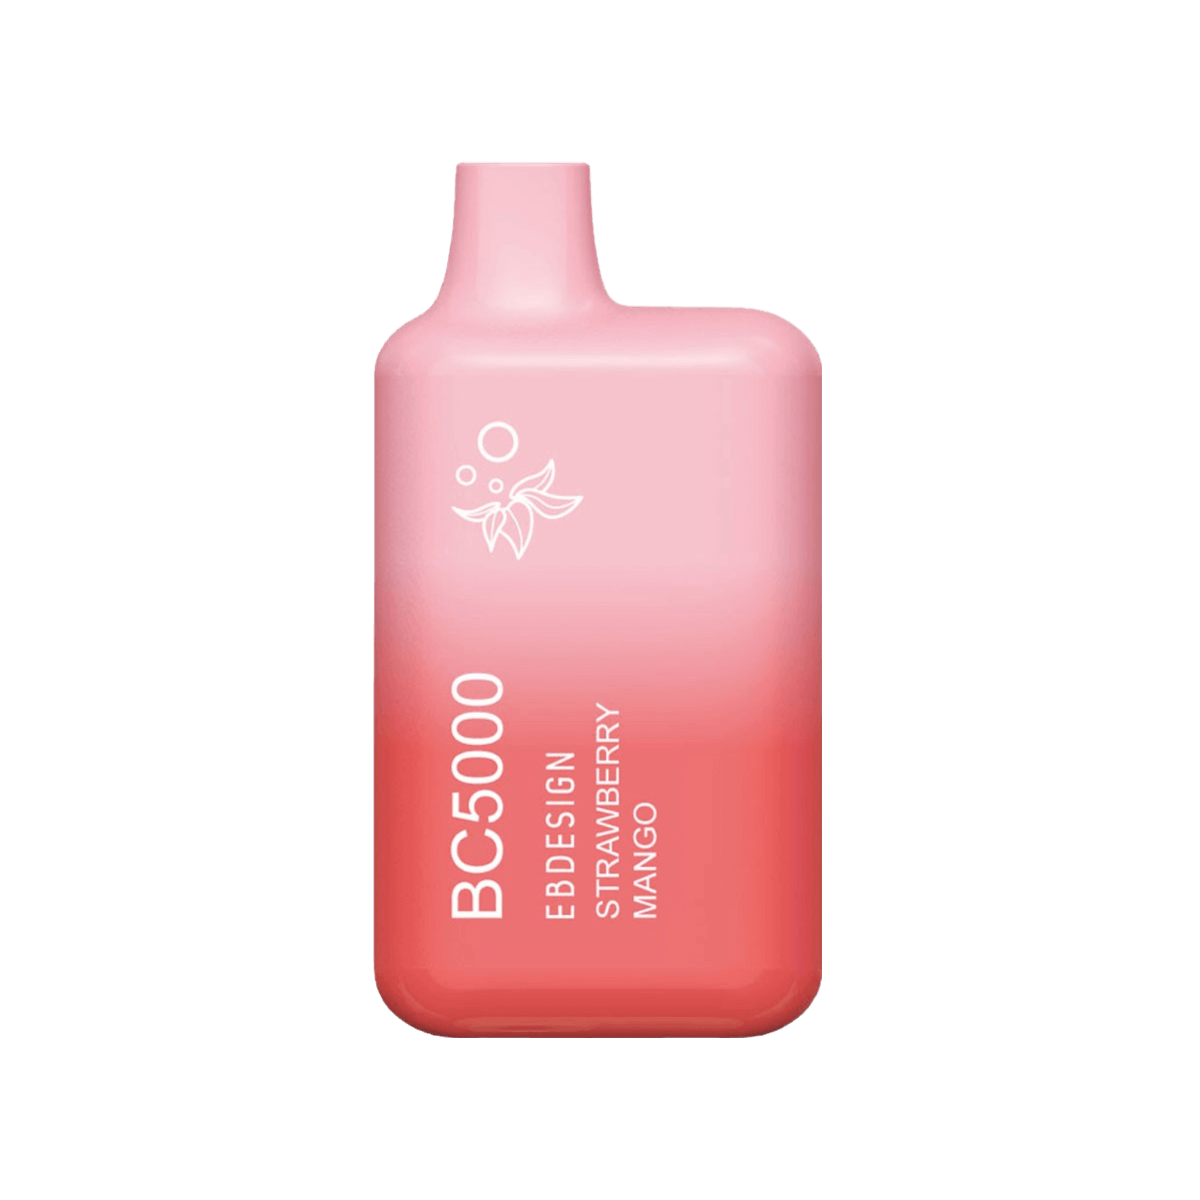 Elfbar BC5000 Disposable Strawberry Mango Flavor